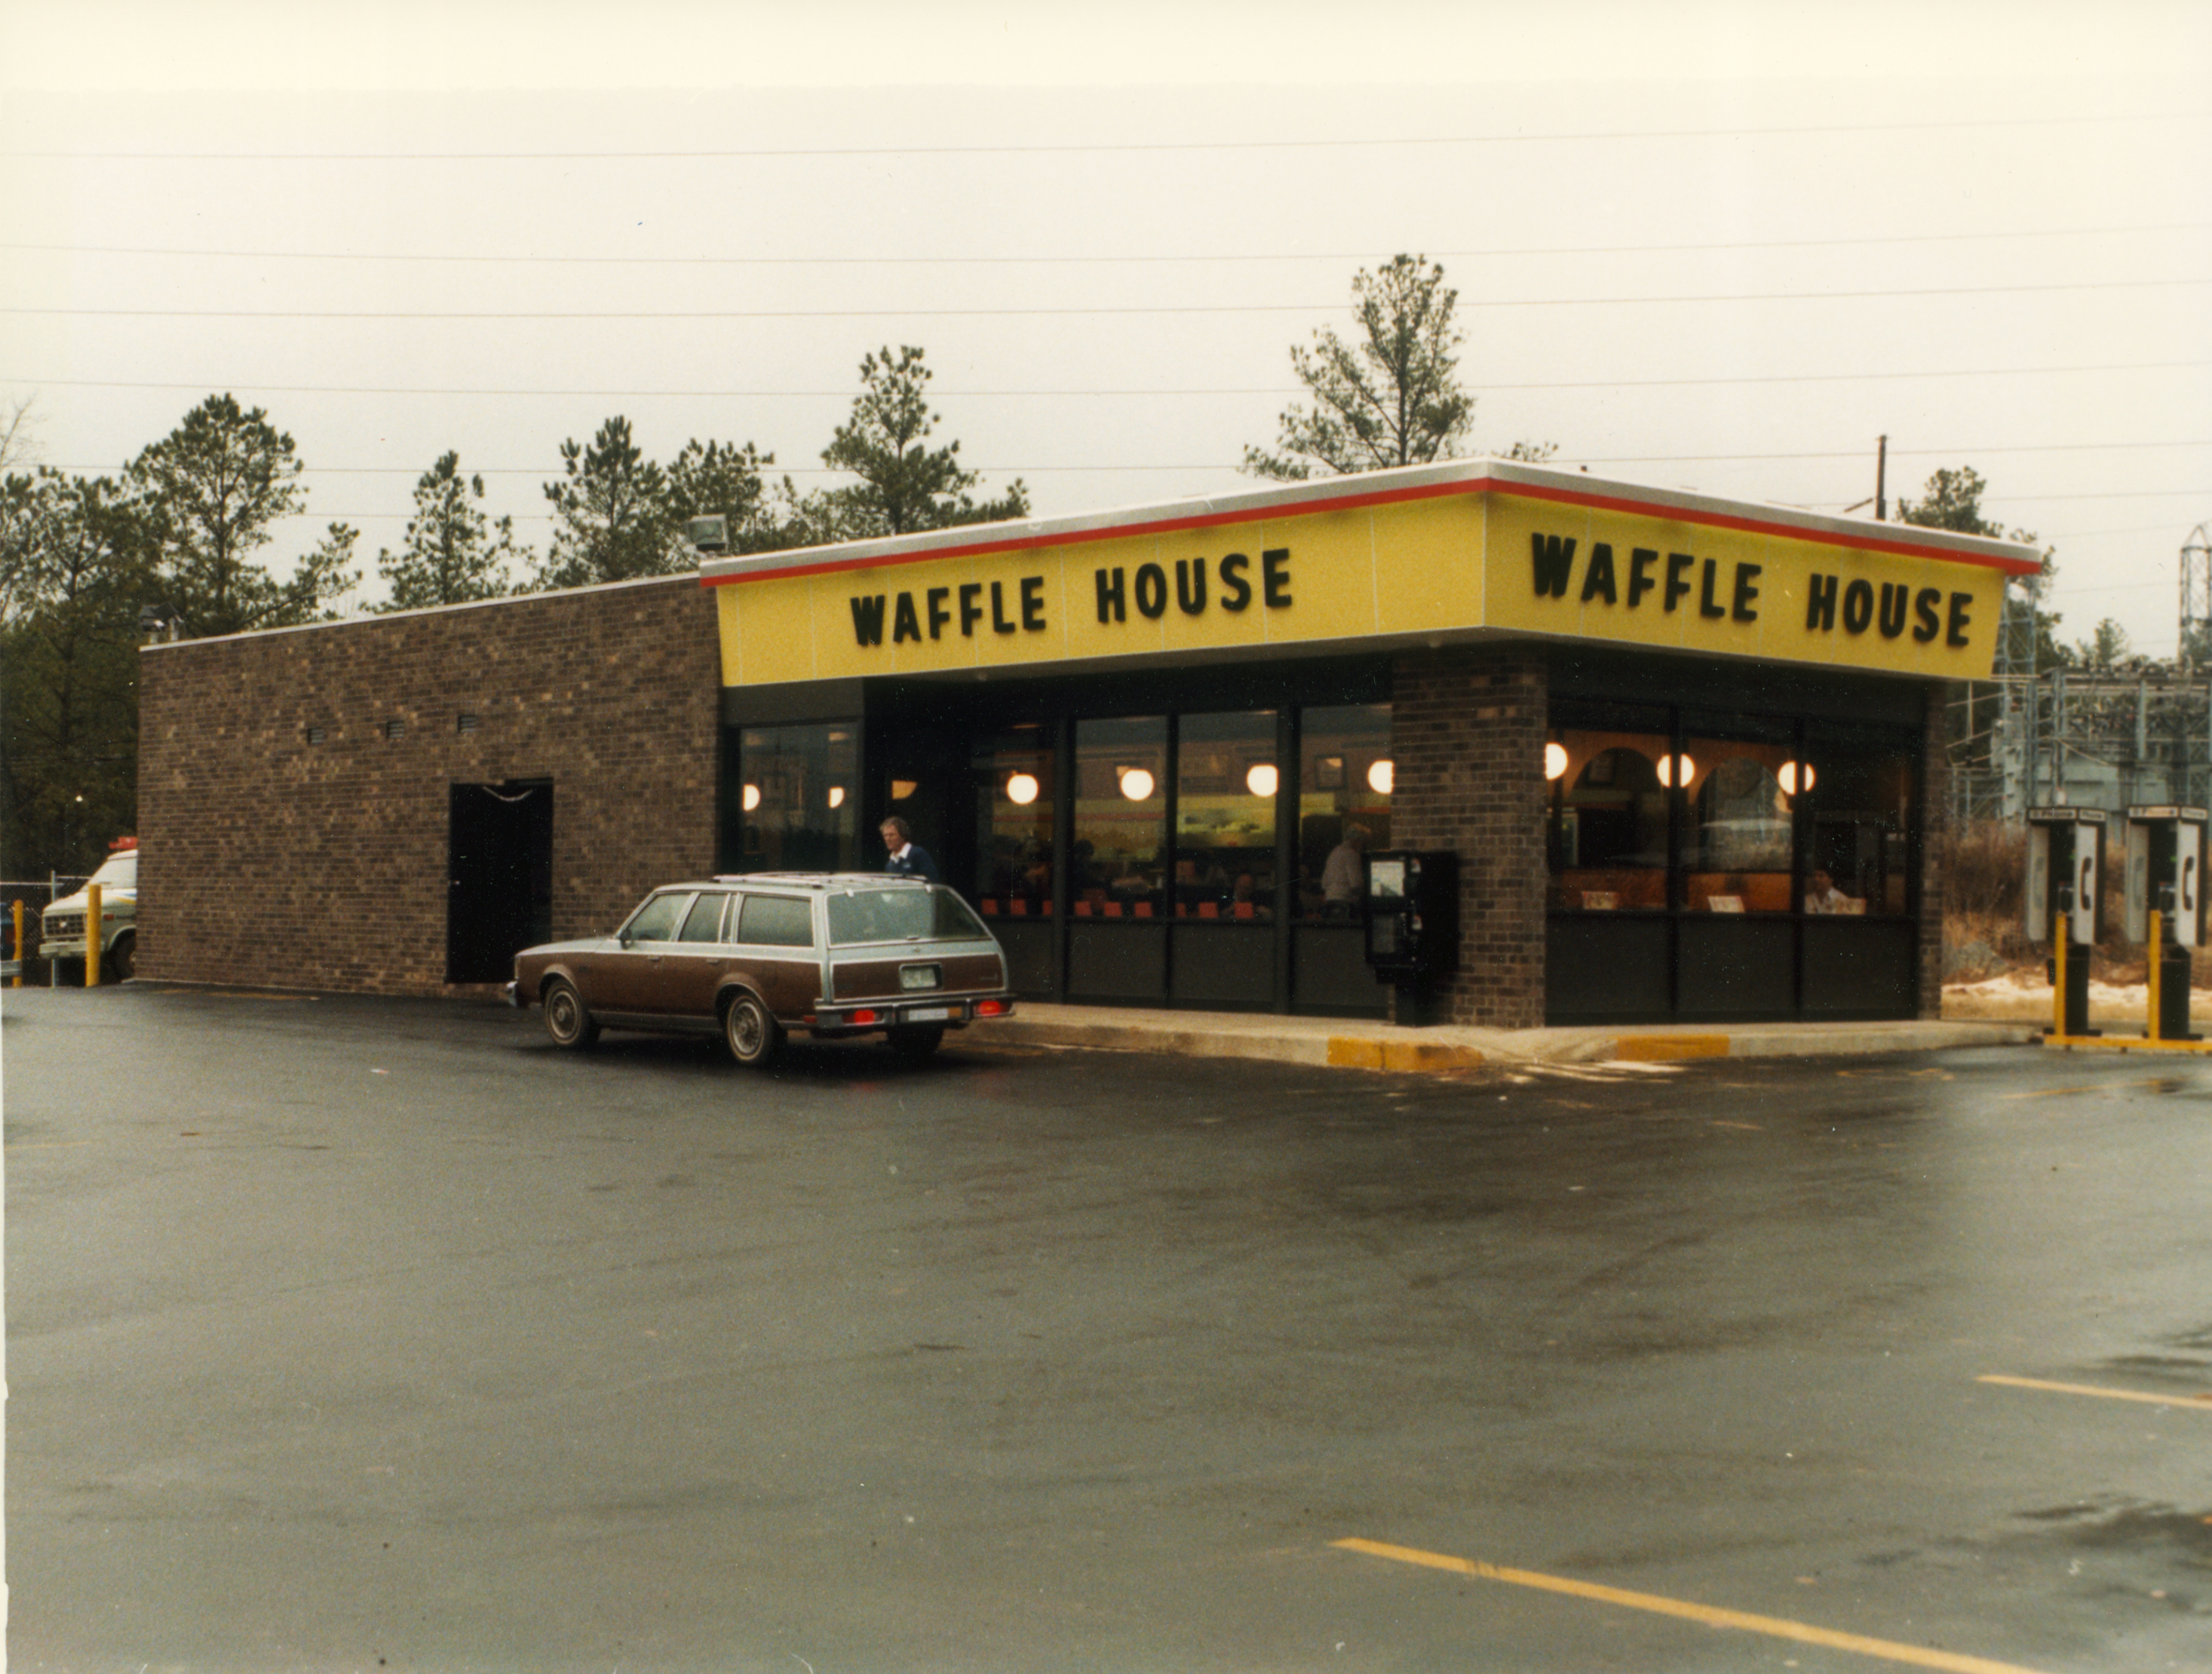 Exterior of Waffle House restaurant